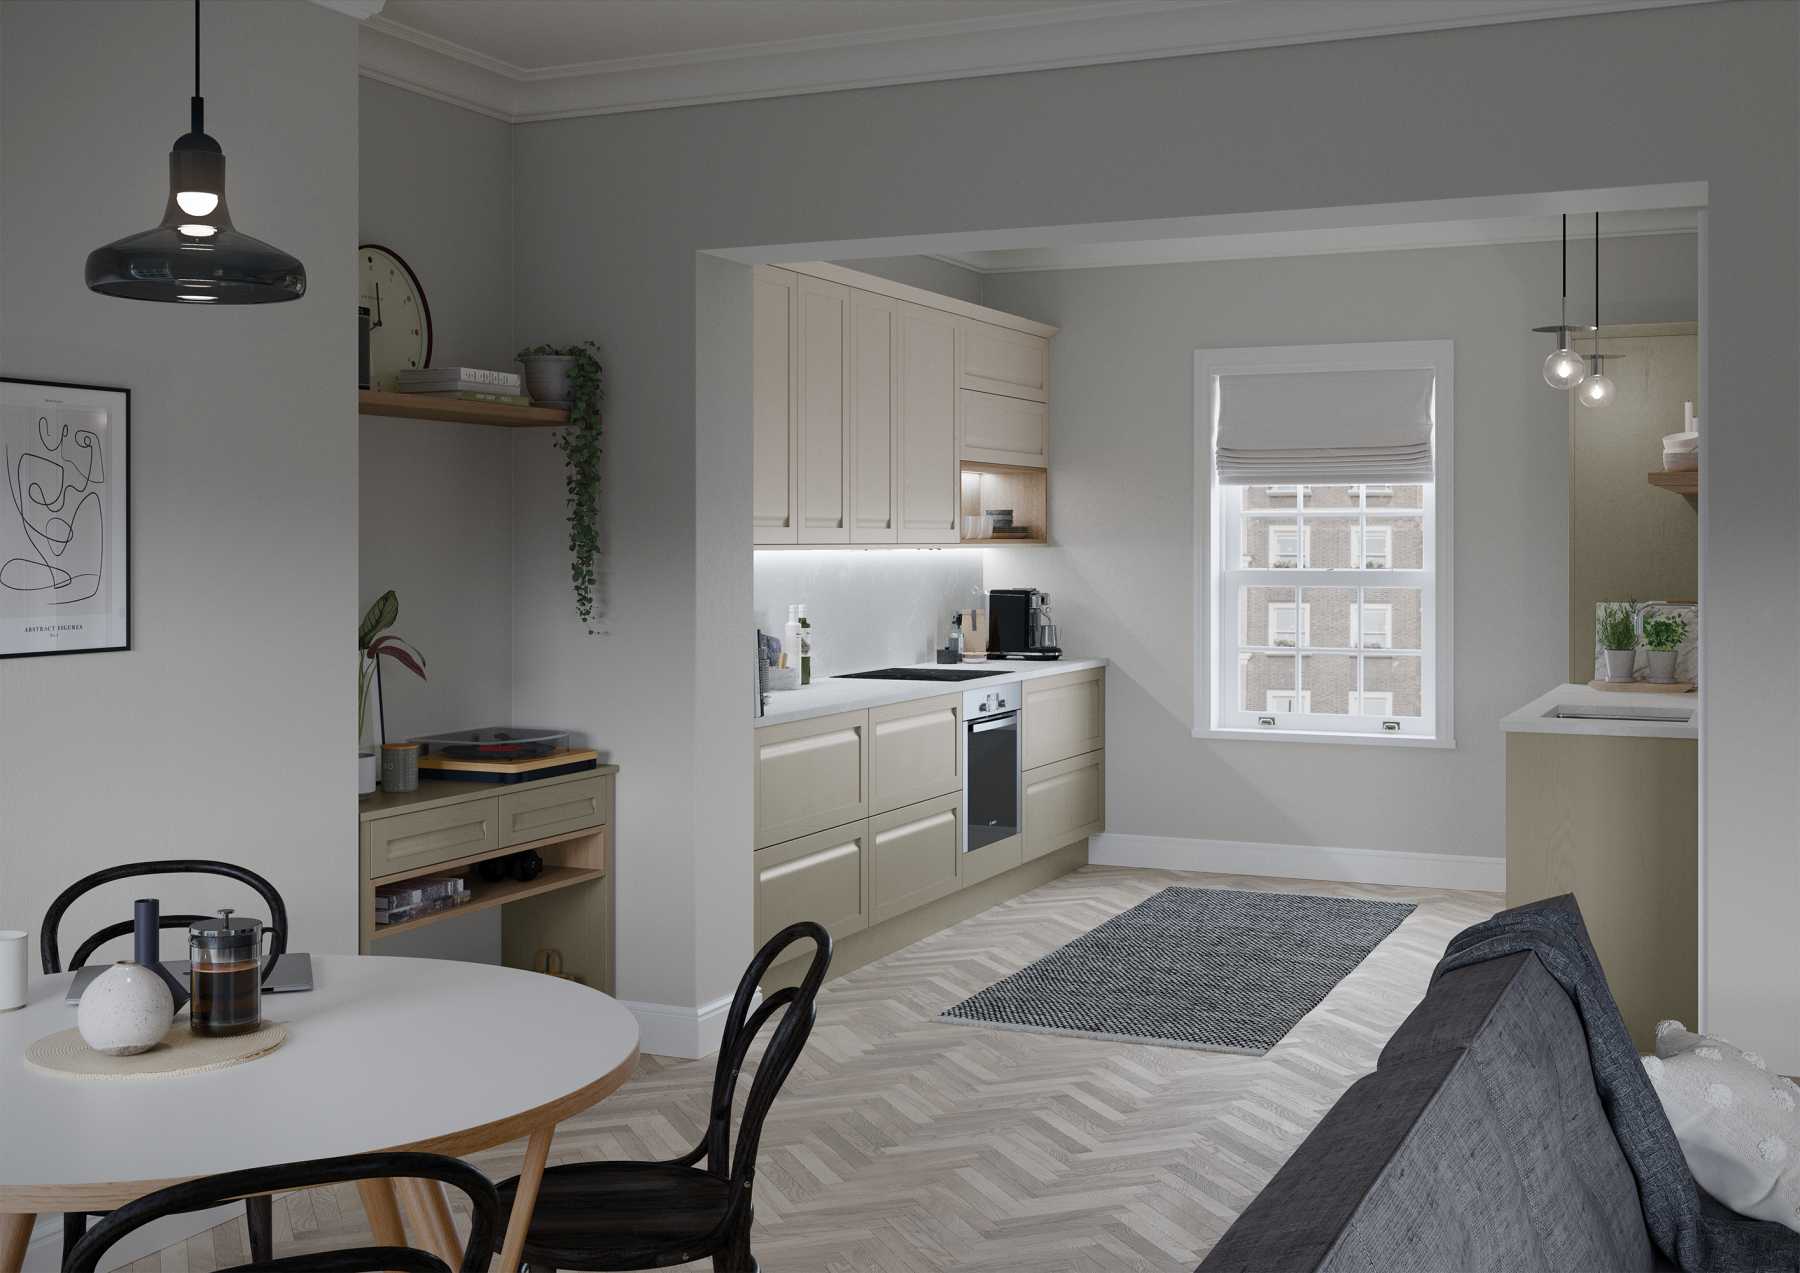 Contemporary Slim Frame Handeless Shaker Kitchen From Living Space